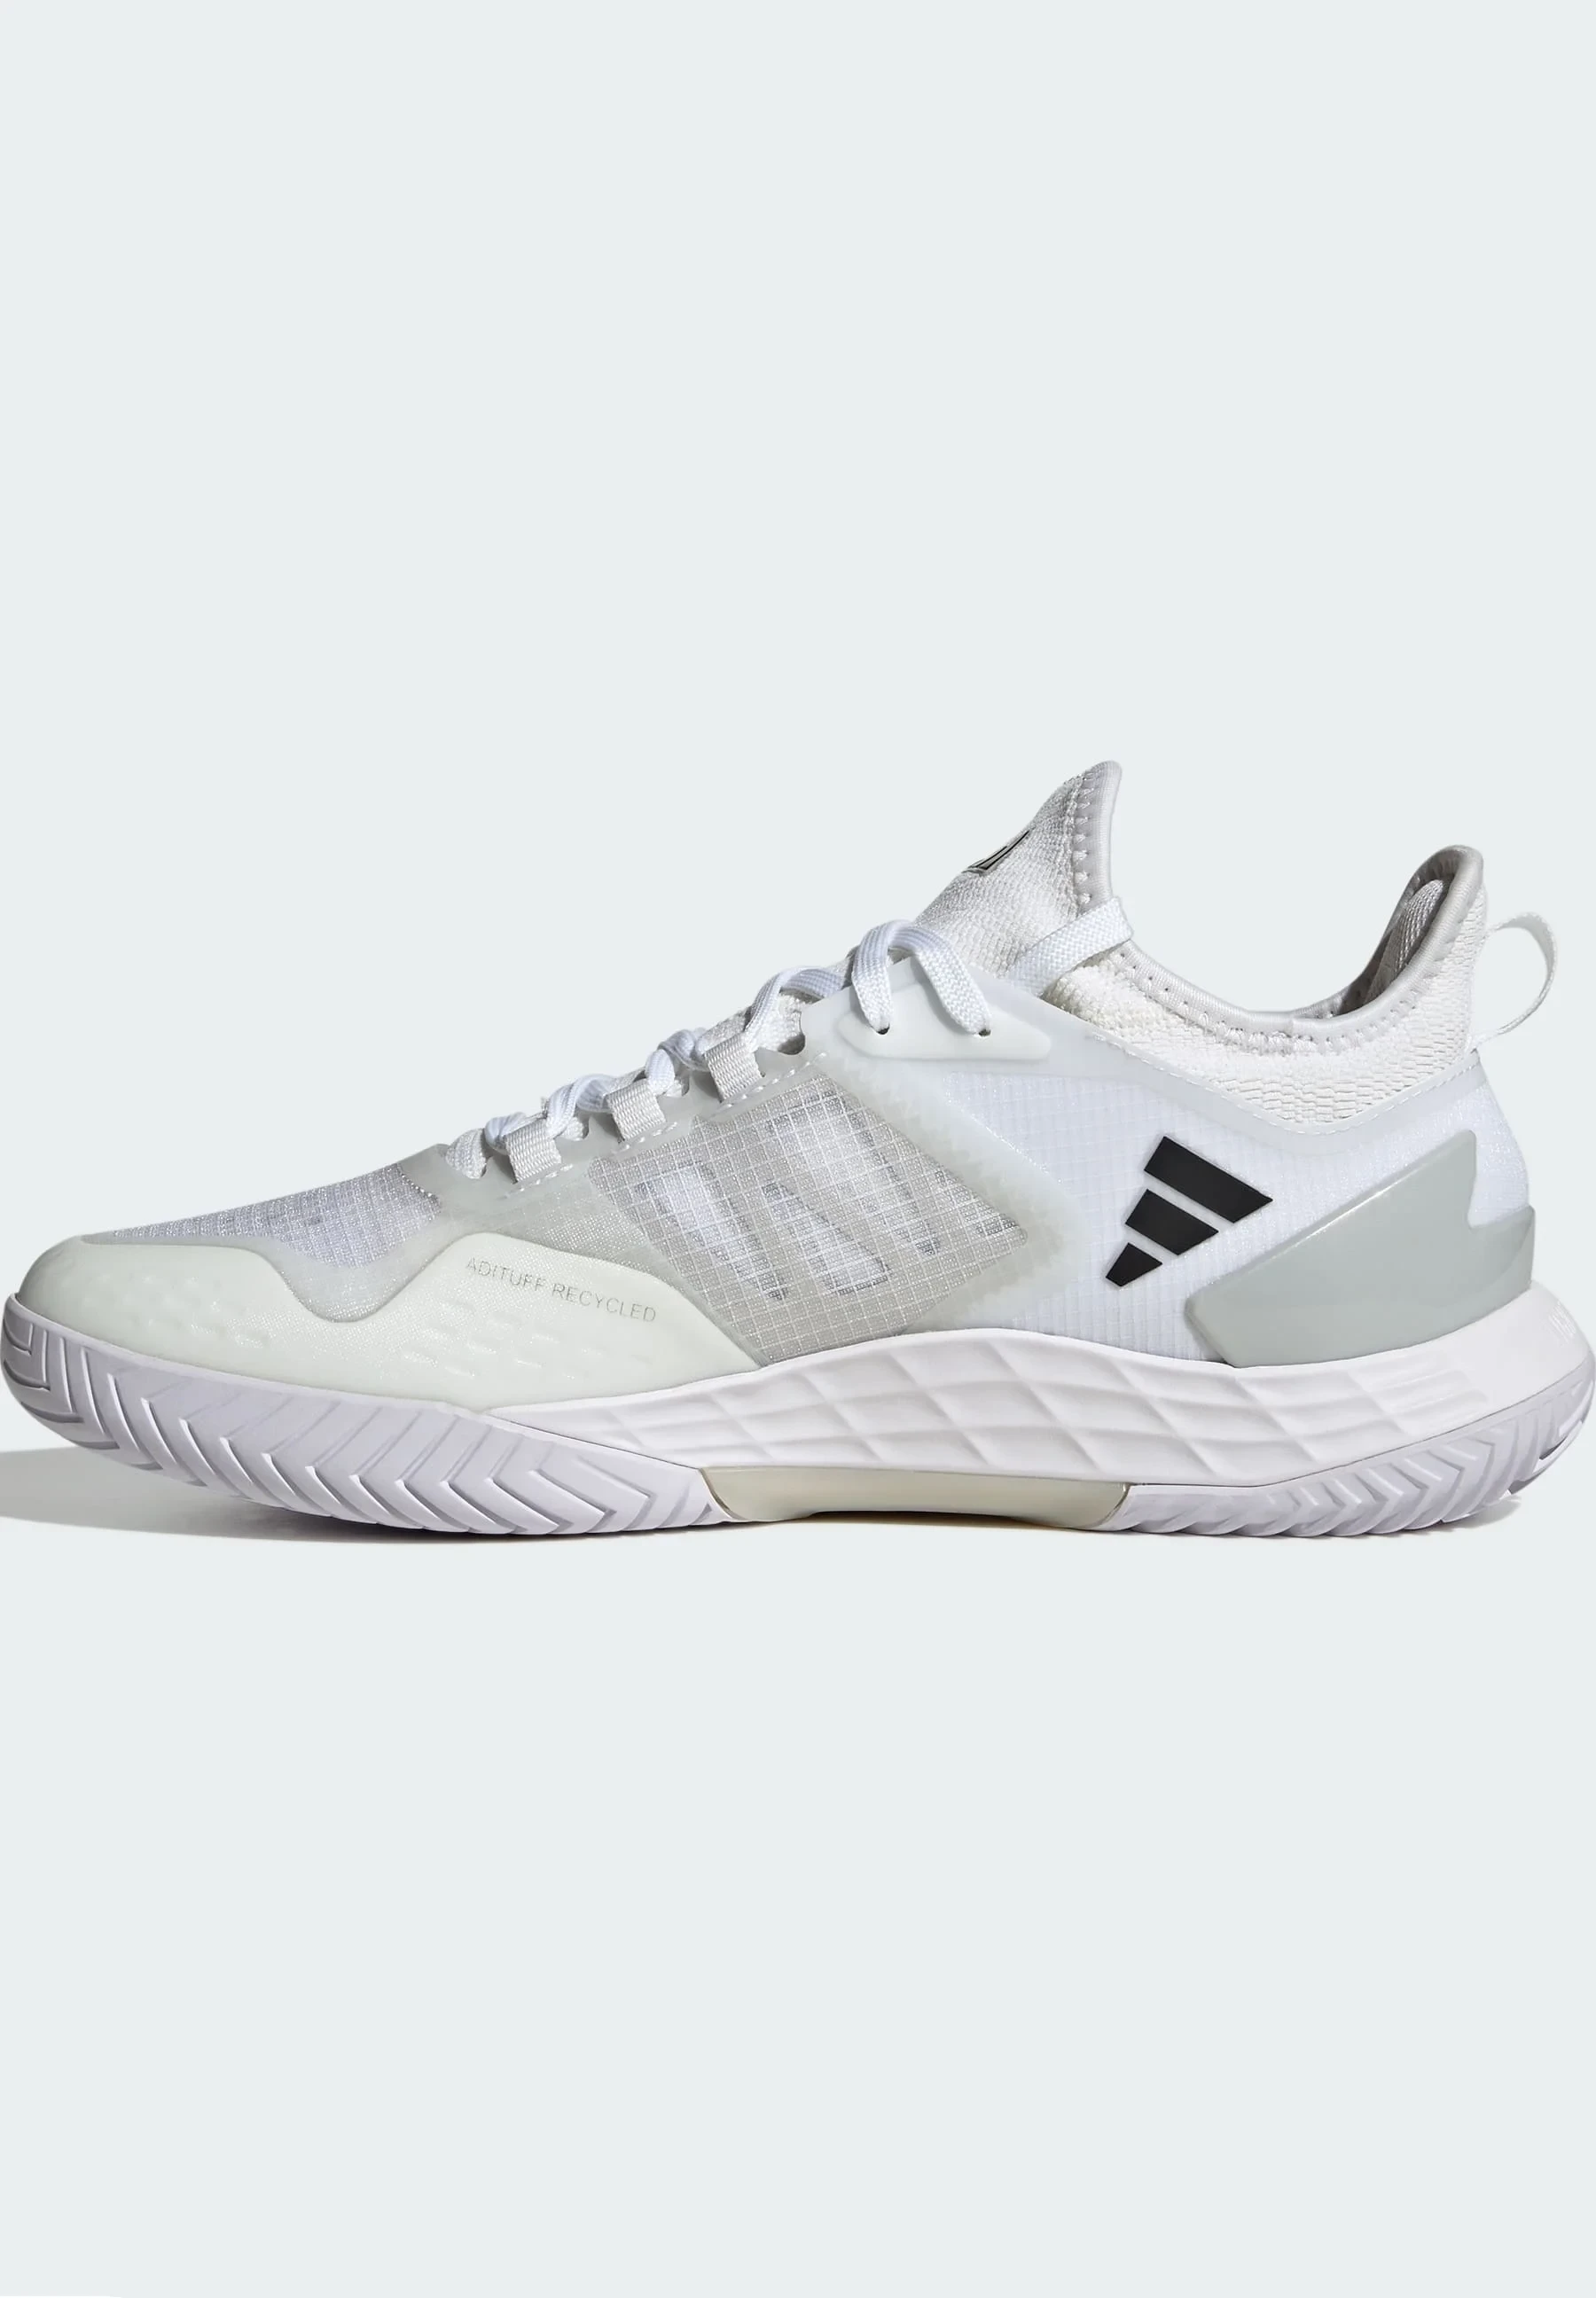 Adidas Adizero Ubersonic 4.1 CL M white